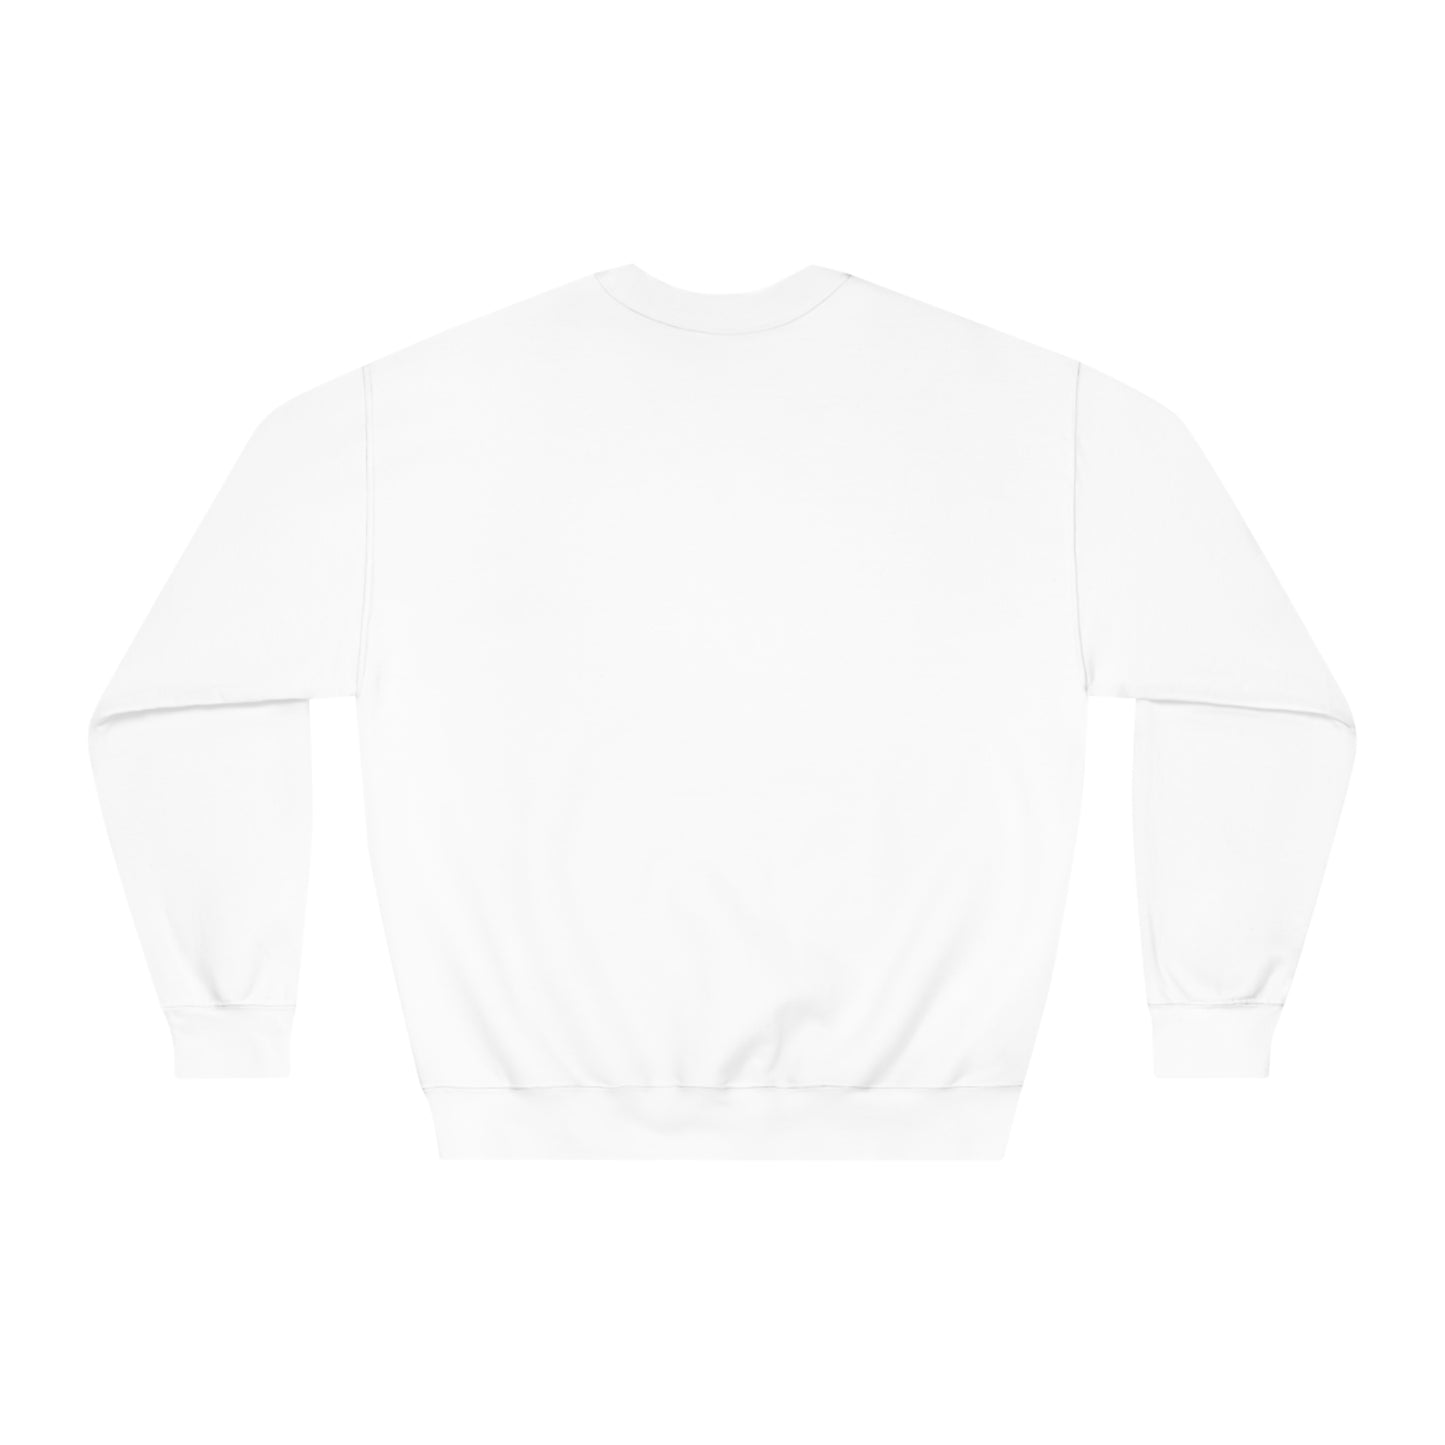 The Sparkle Sweatshirt